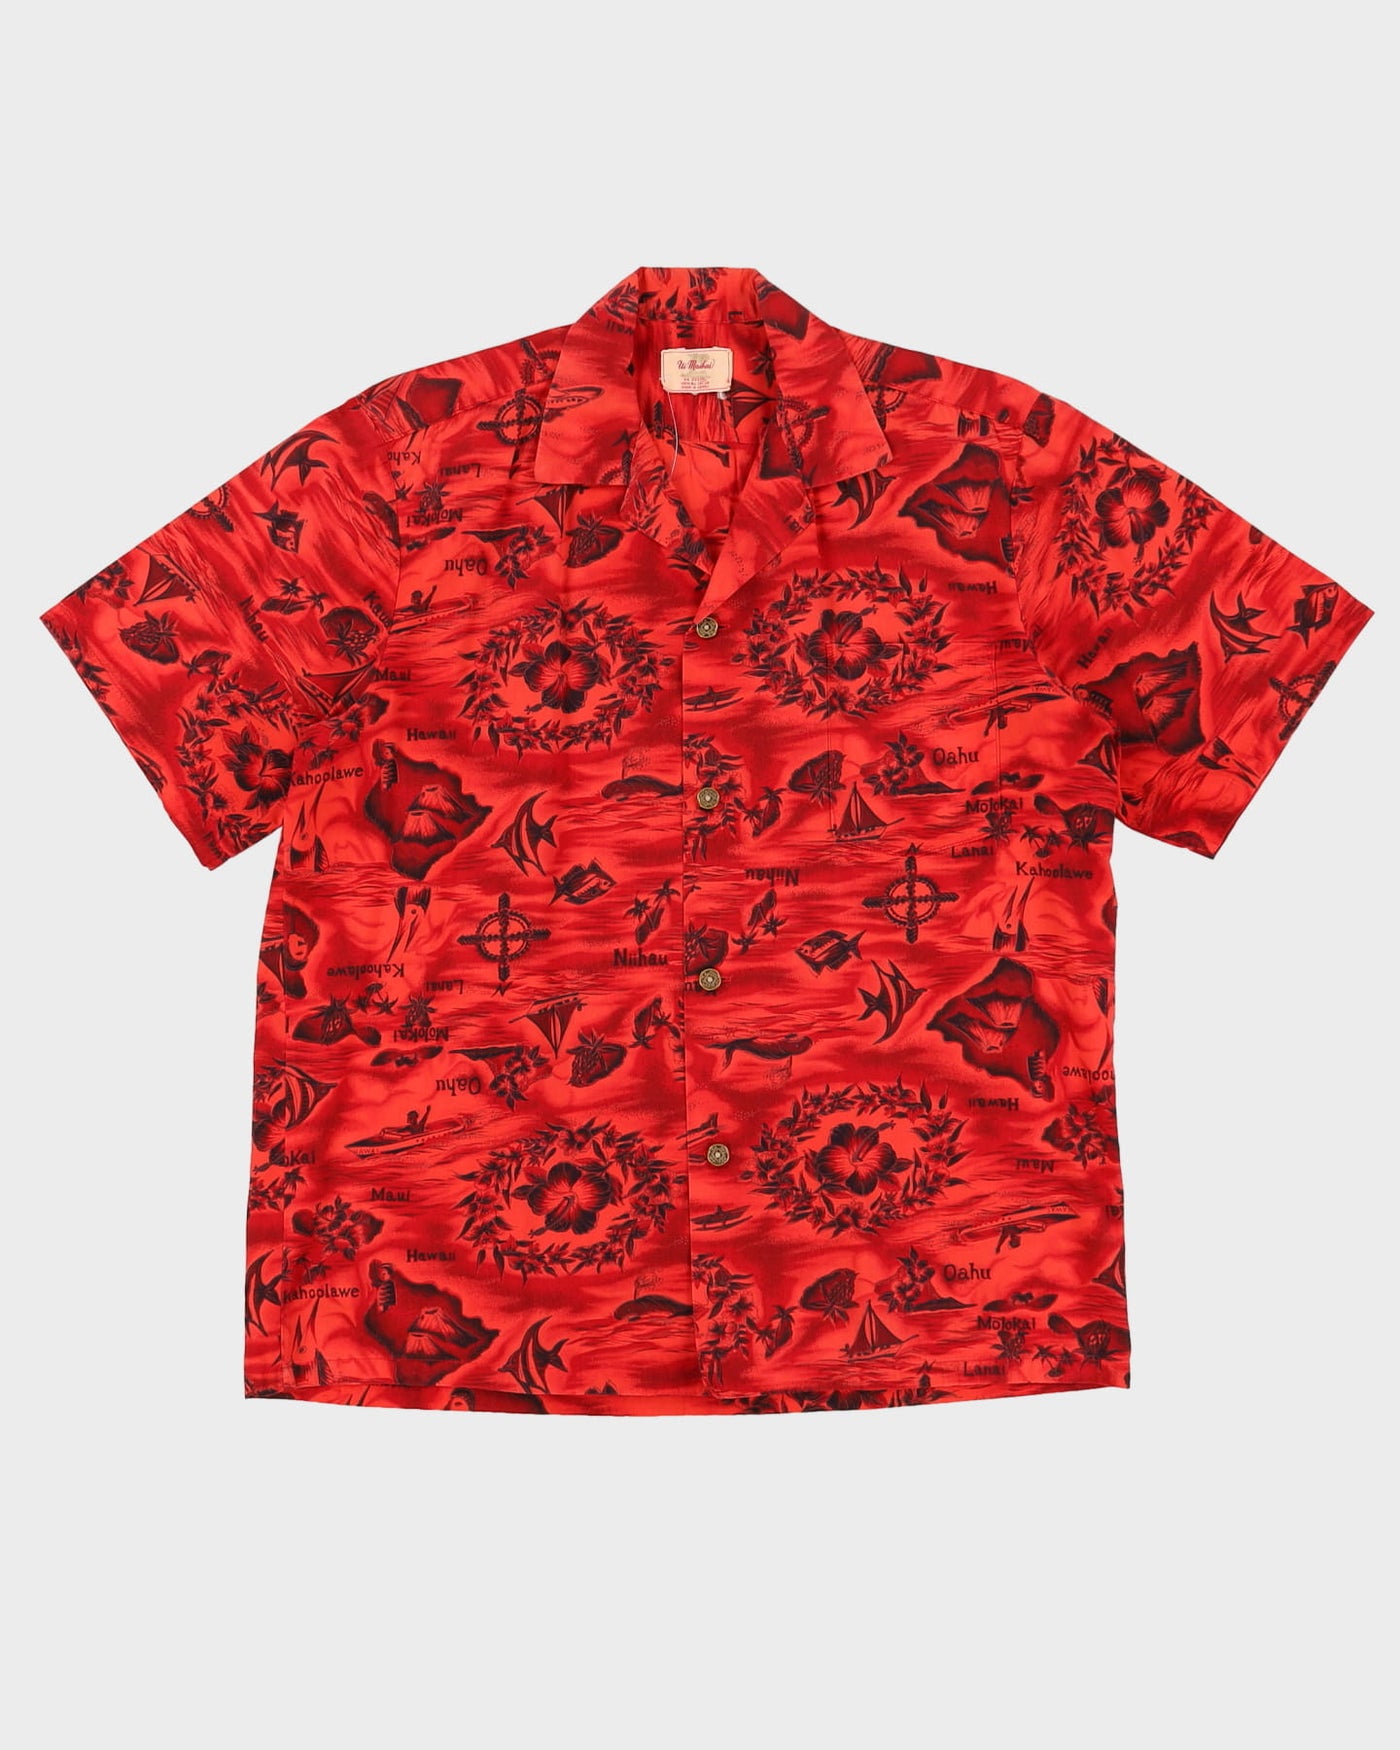 1960s Red Patterned Ui-Maikai Hawaiian Shirt - L